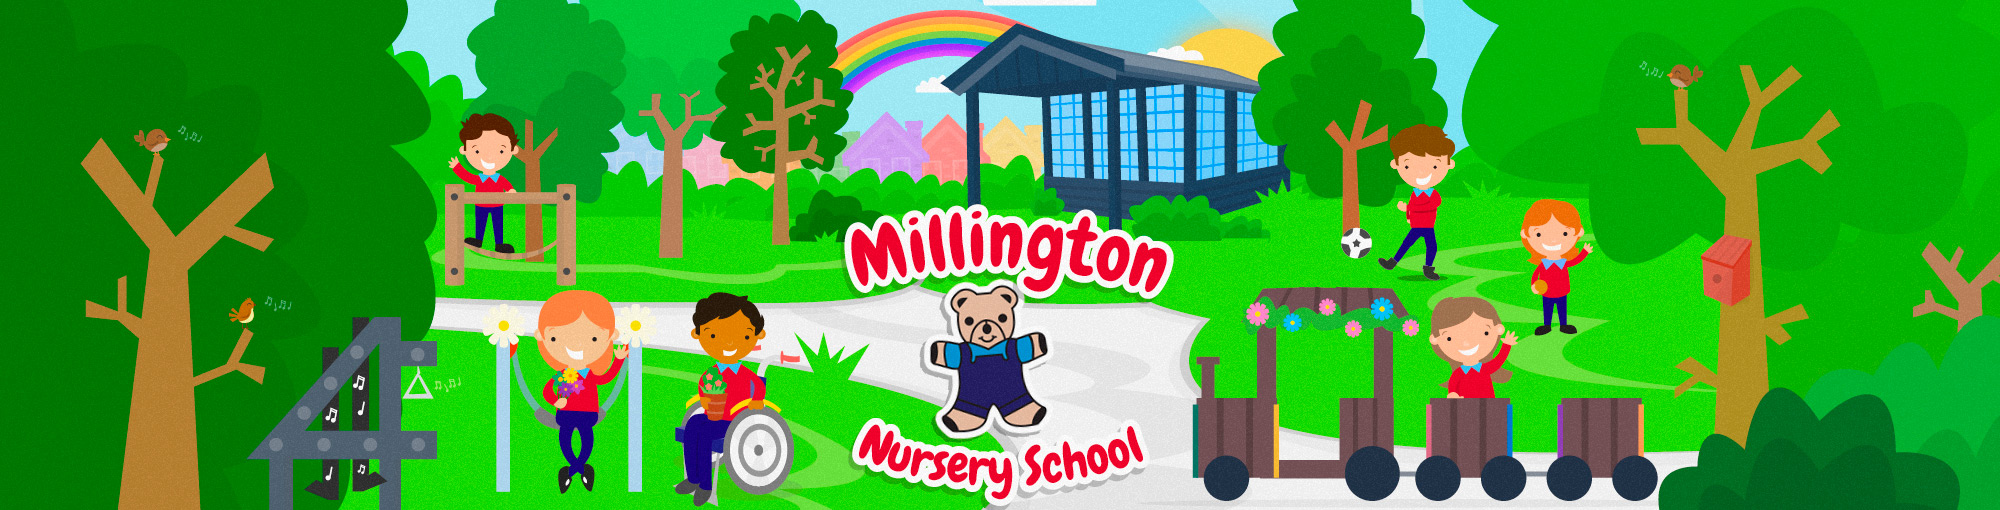 Millington Nursery School Craigavon Ave, Portadown